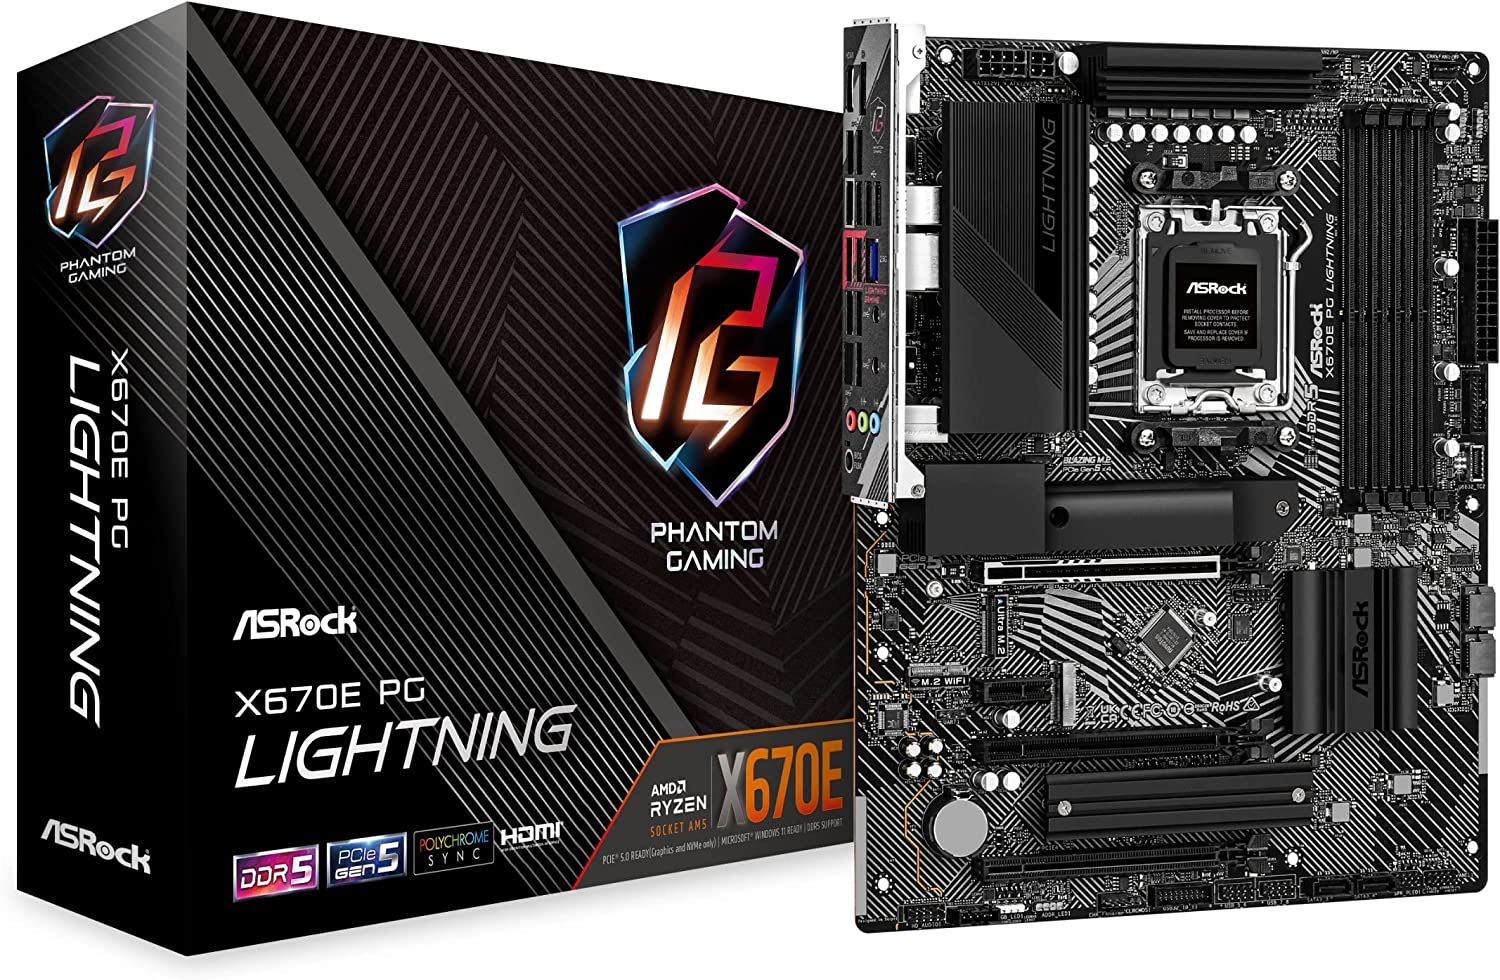 ASRock X670E PG Lightning Gaming Motherboard